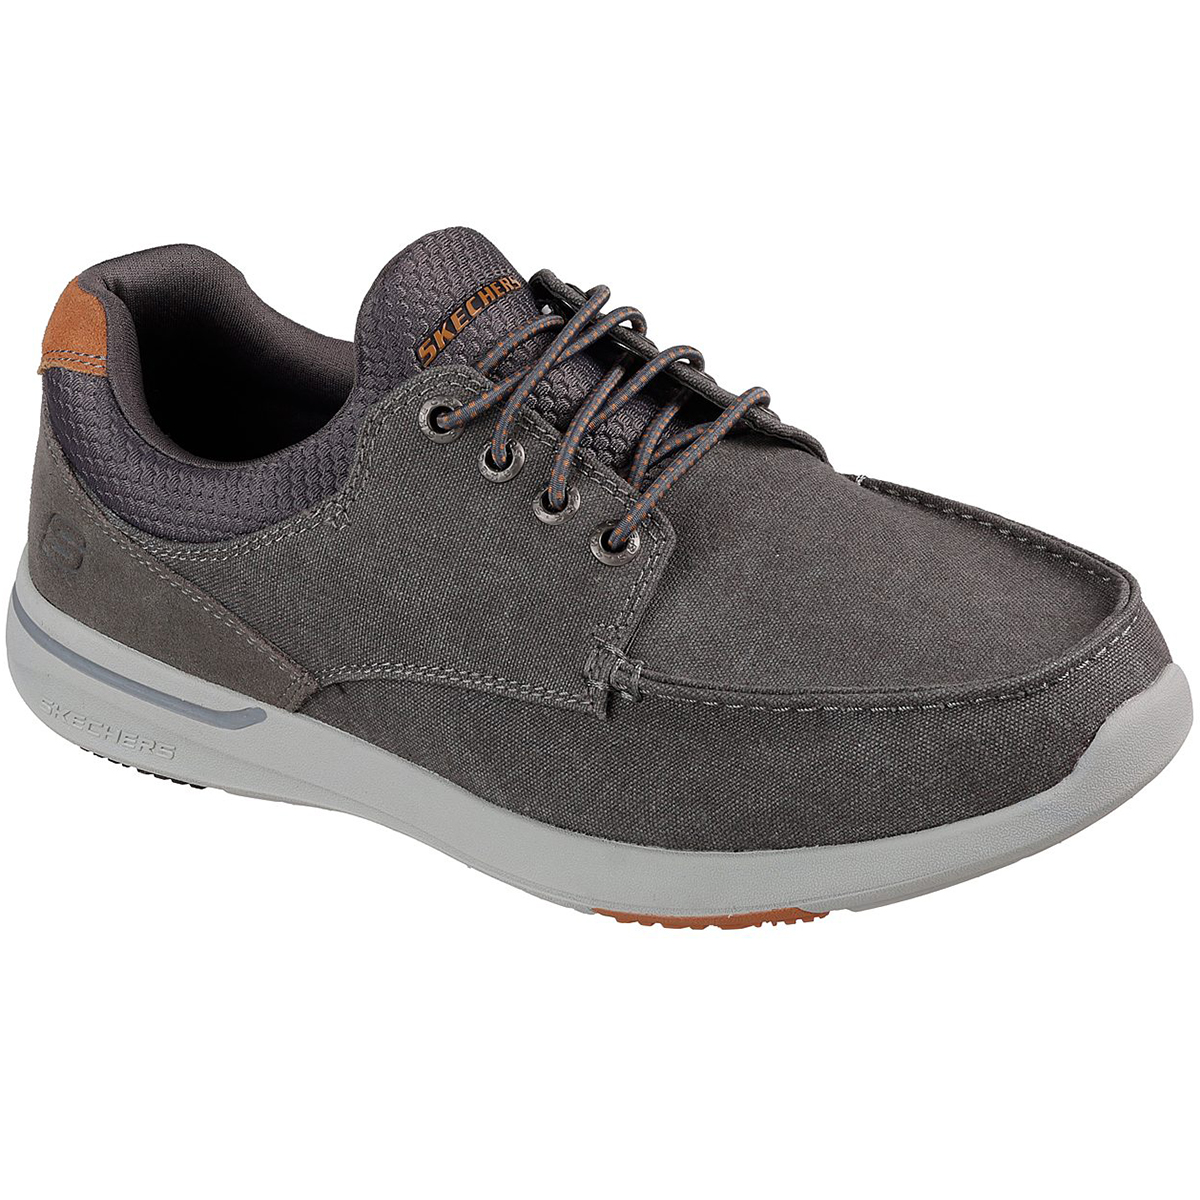 Skechers Men's Relaxed Fit: Elent- Mosen Boat Shoes - Black, 8.5